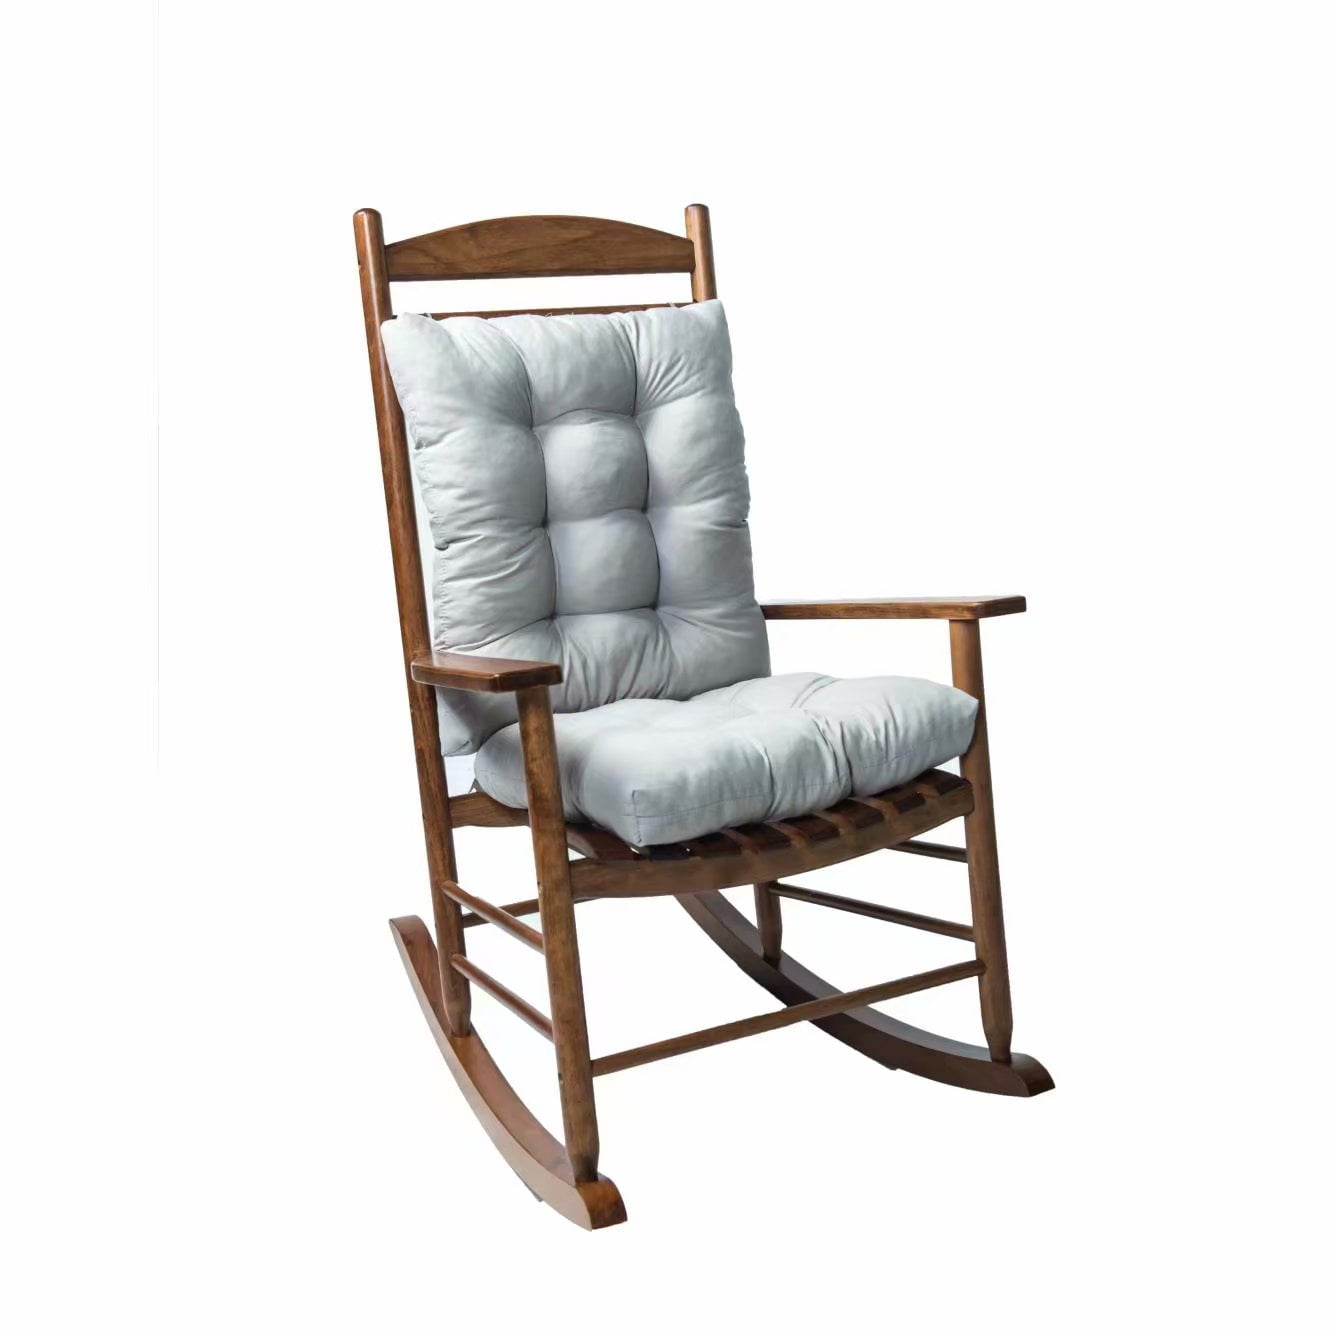 Outdoor garden cushion home recliner cushion rocking chair